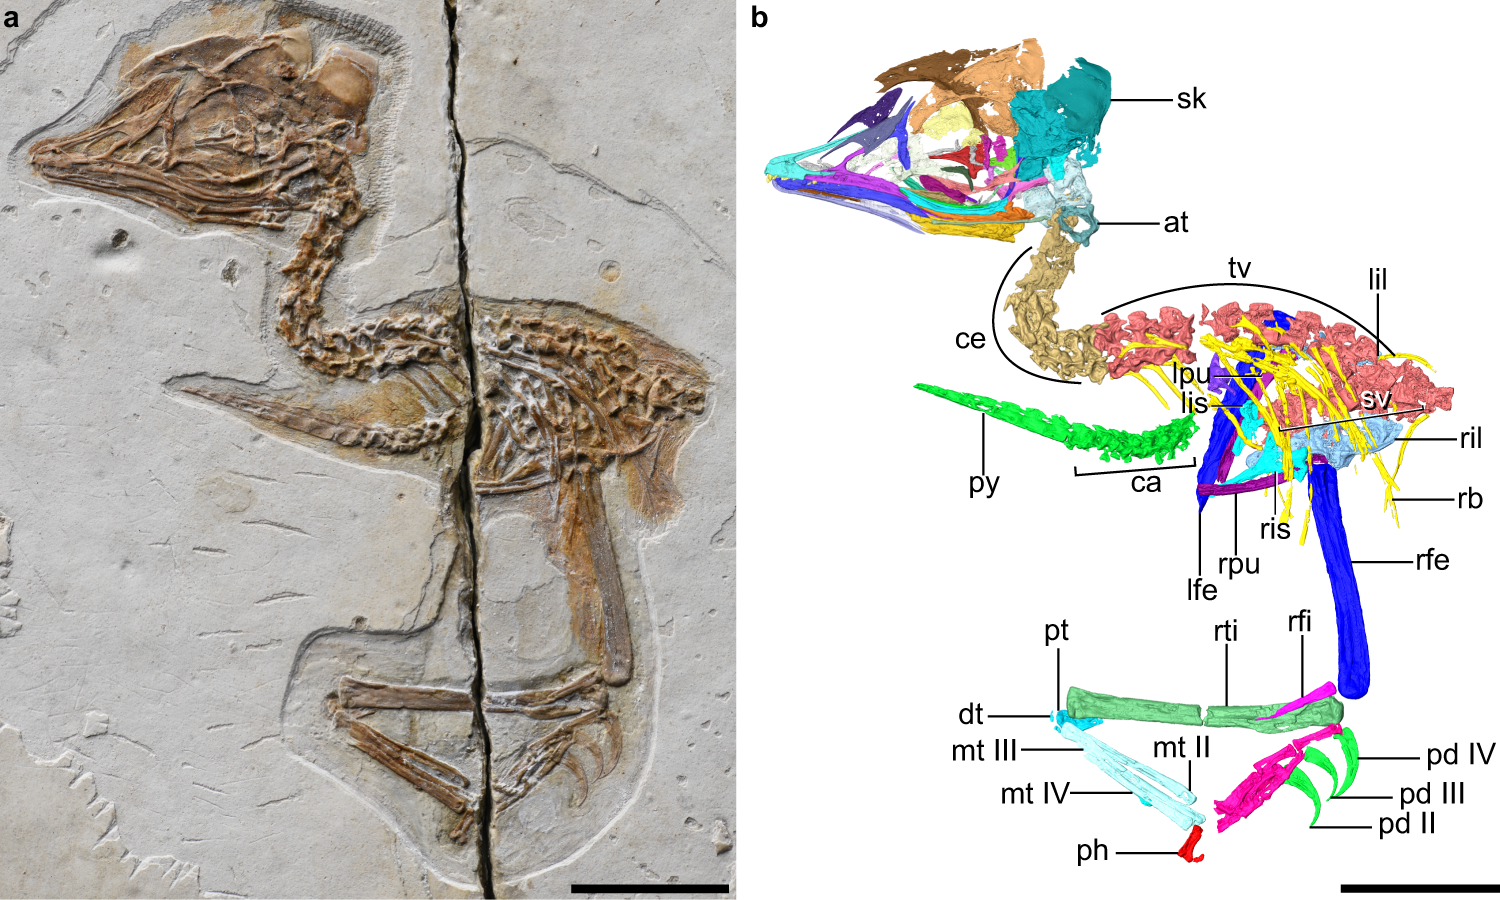 Cretaceous bird with dinosaur skull sheds light on avian cranial evolution  | Nature Communications